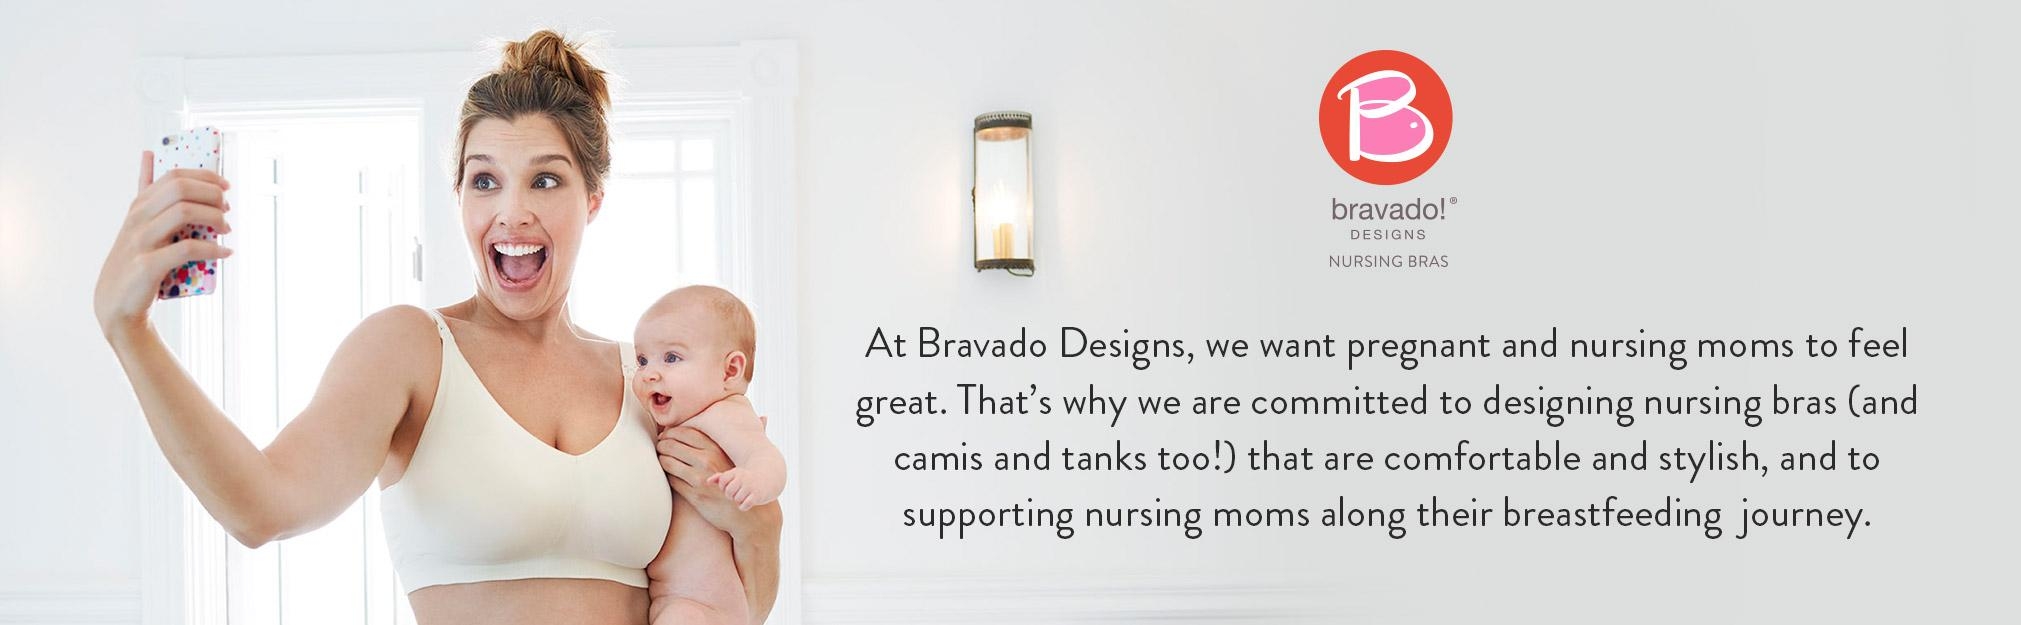 Bravado - A-B - Brand  Baby Clothing & Accessories Singapore